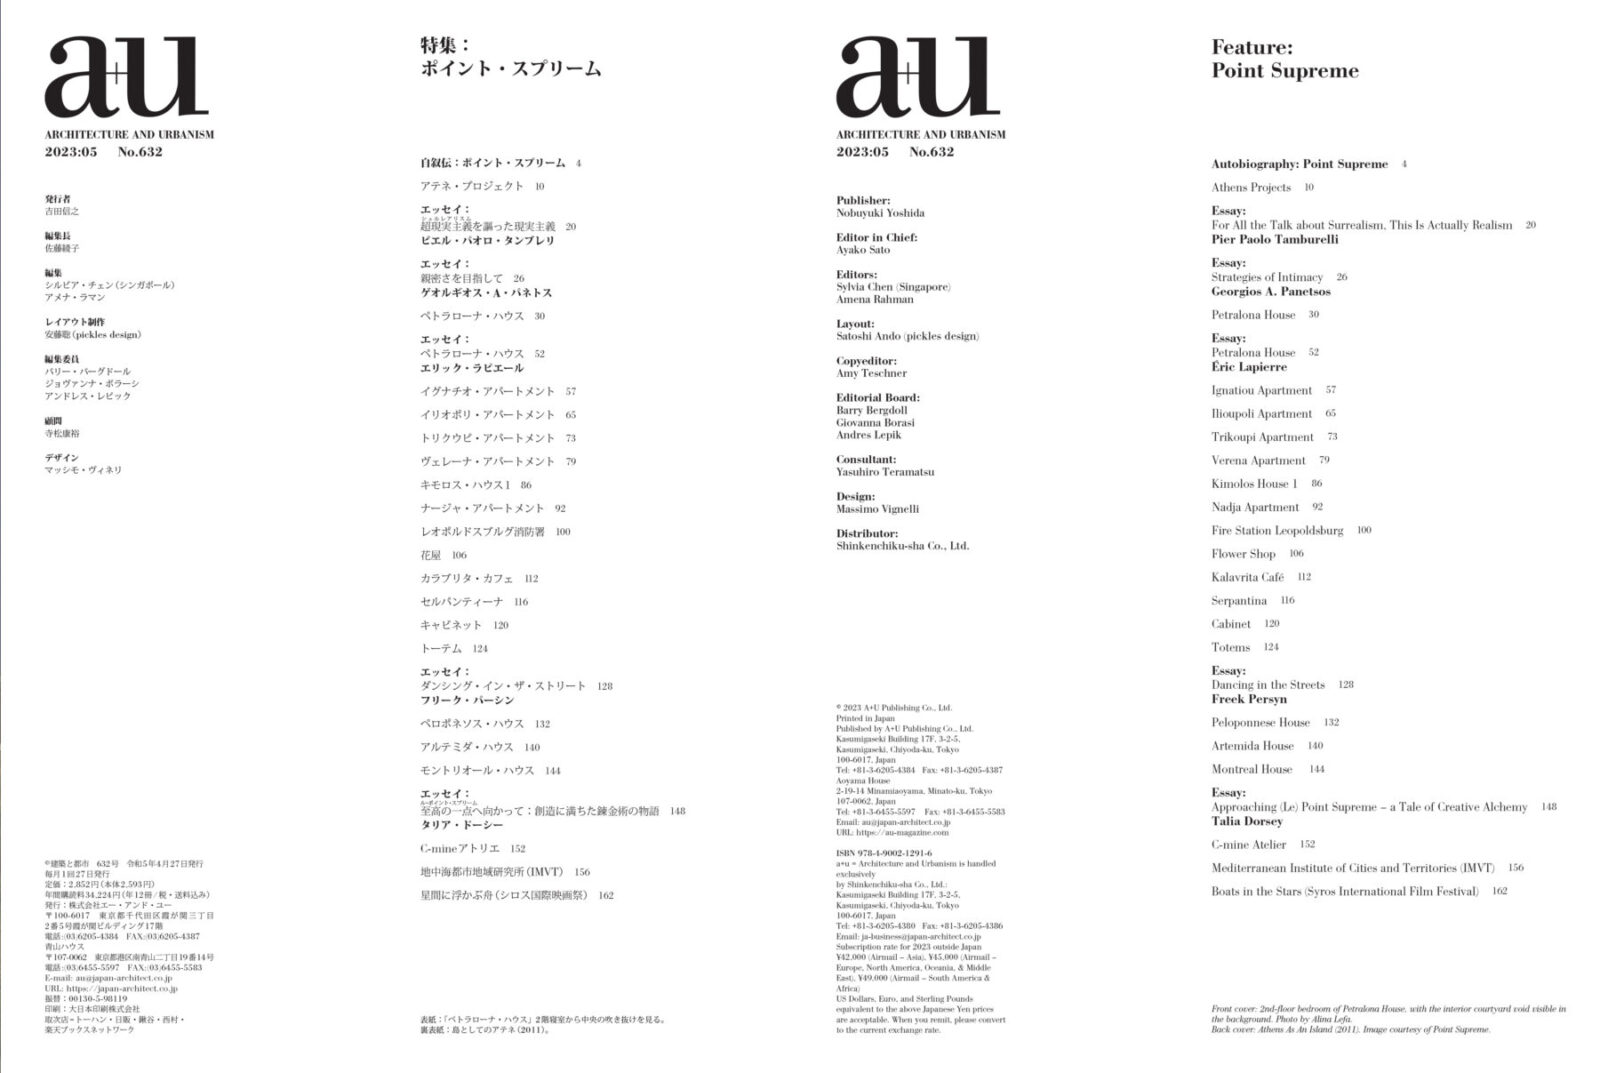 Archisearch Παρουσίαση του νέου τεύχους A+U Magazine, αφιερωμένο στο έργο του Αθηναϊκού αρχιτεκτονικού γραφείου Point Supreme, στο βιβλιοπωλείο Hyper Hypo.